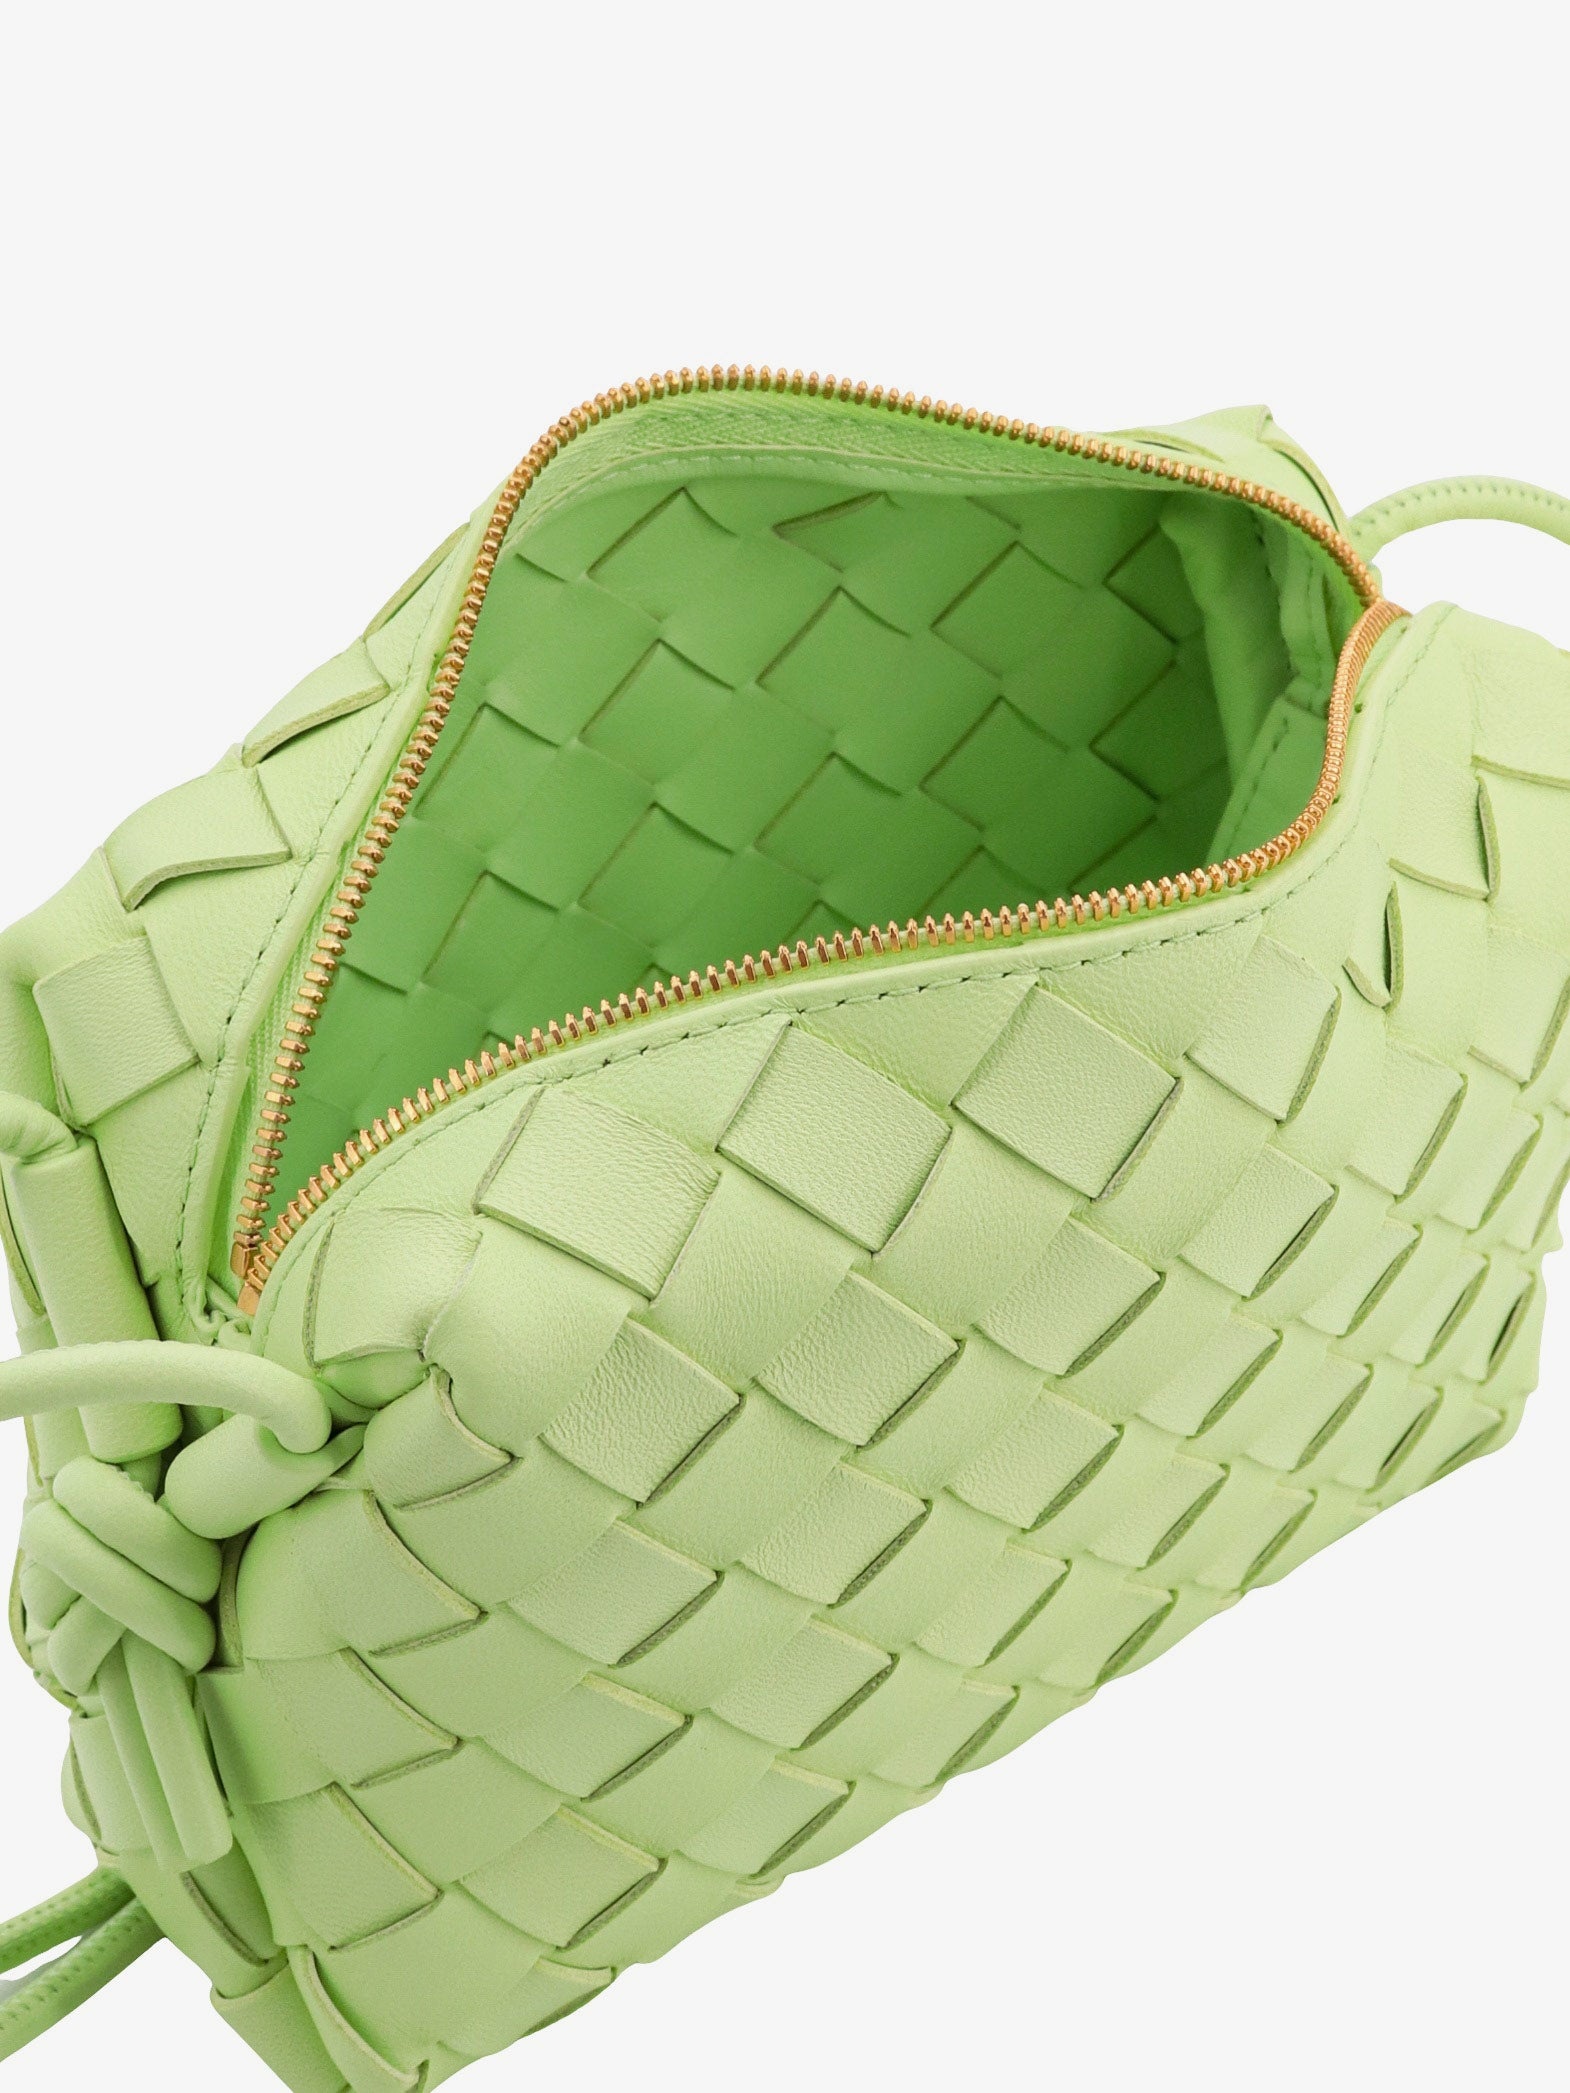 Bottega Veneta Loop - Shoulder bag for Woman - Green - 723547V1G11-3579